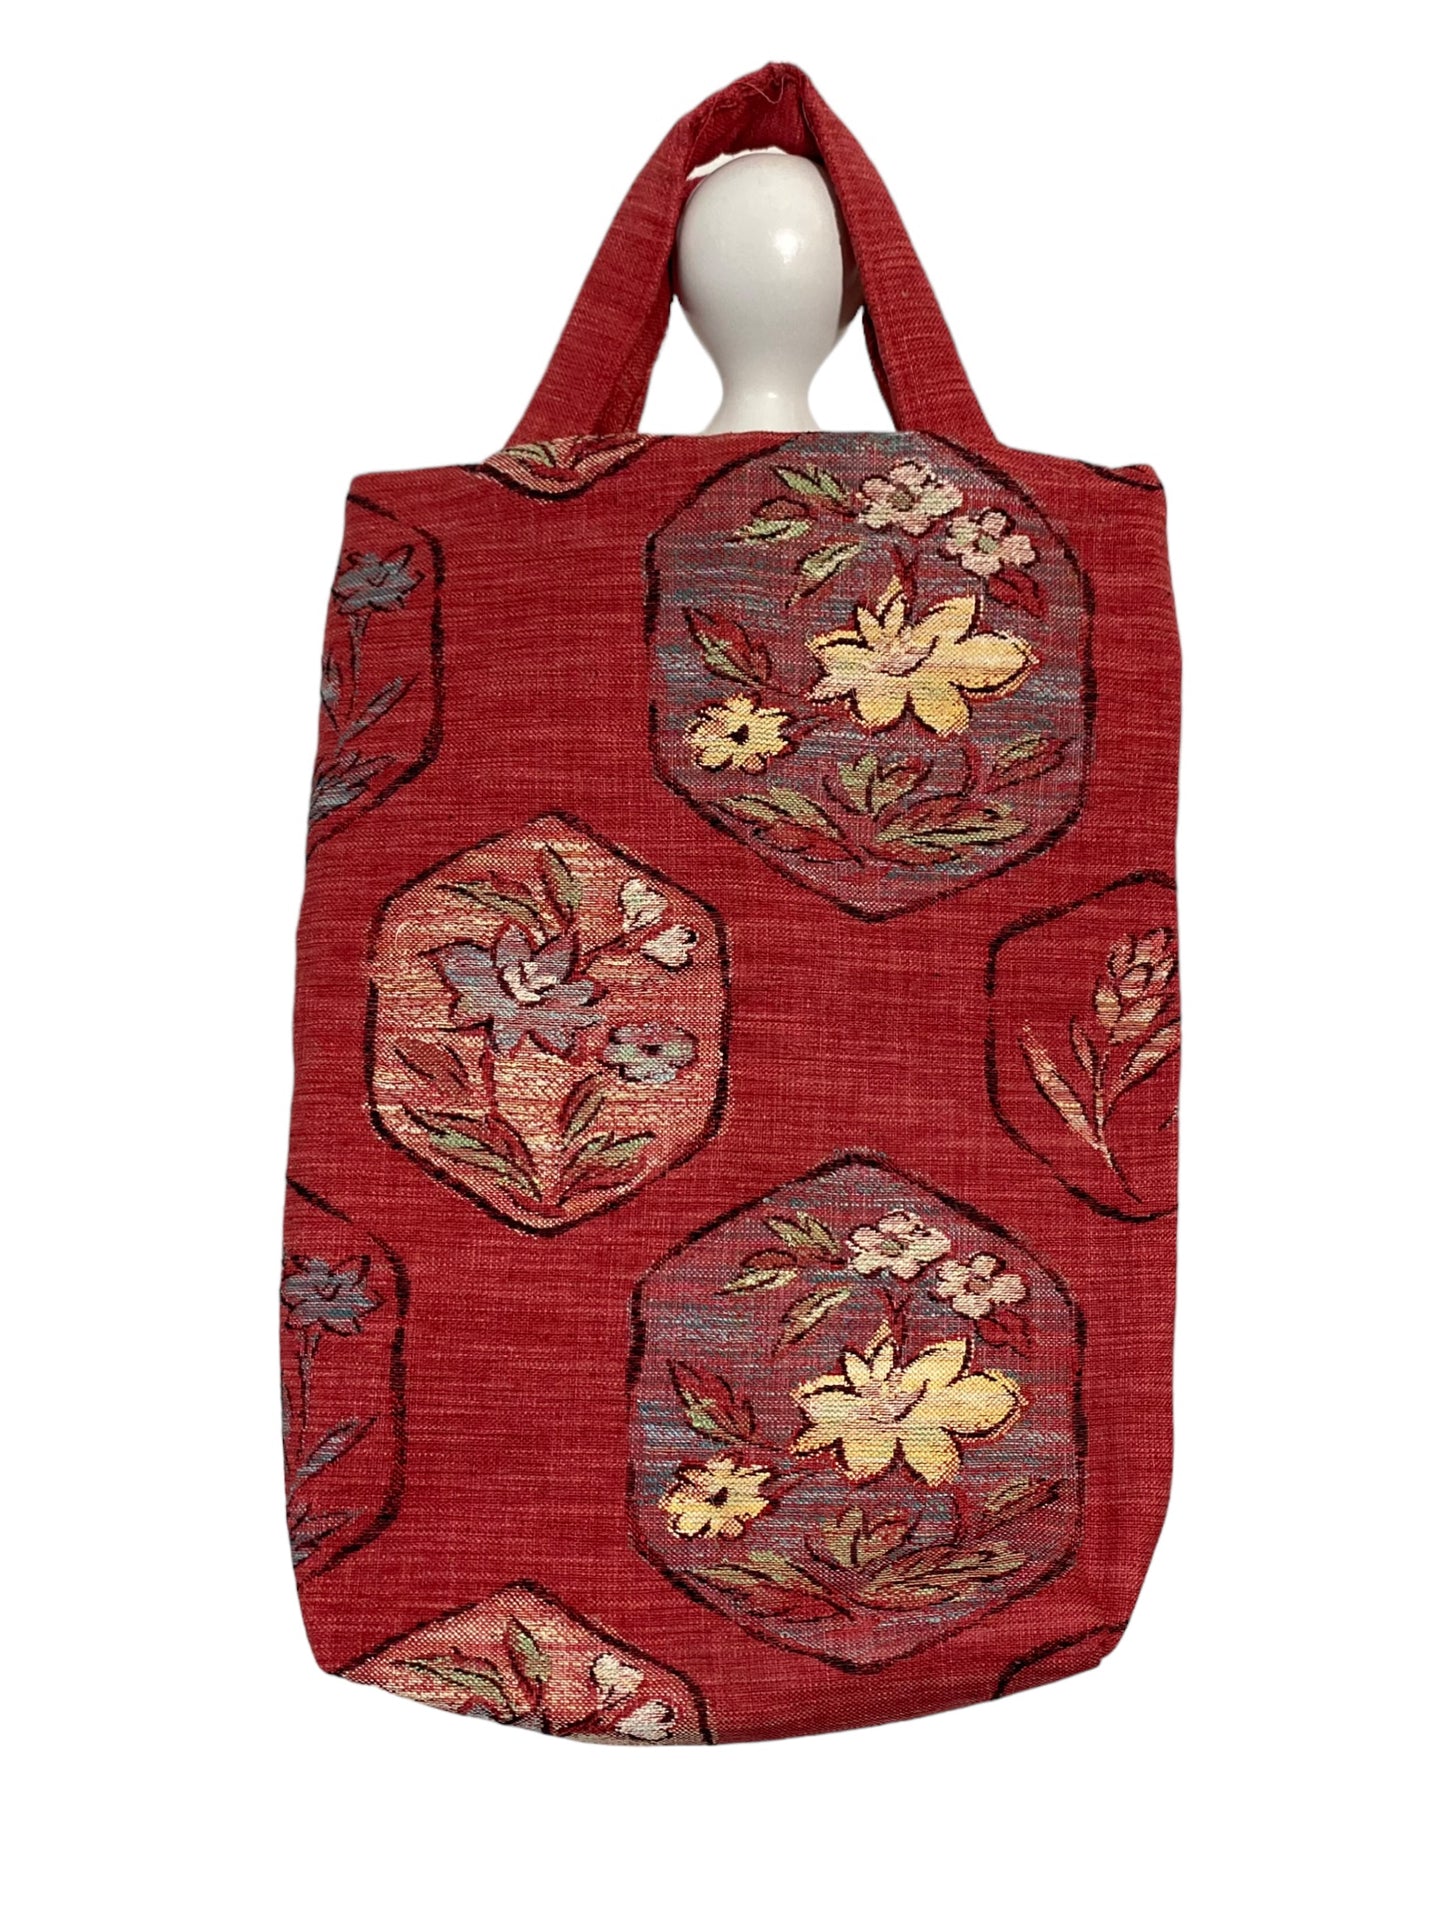 Handbags made from kimono obi